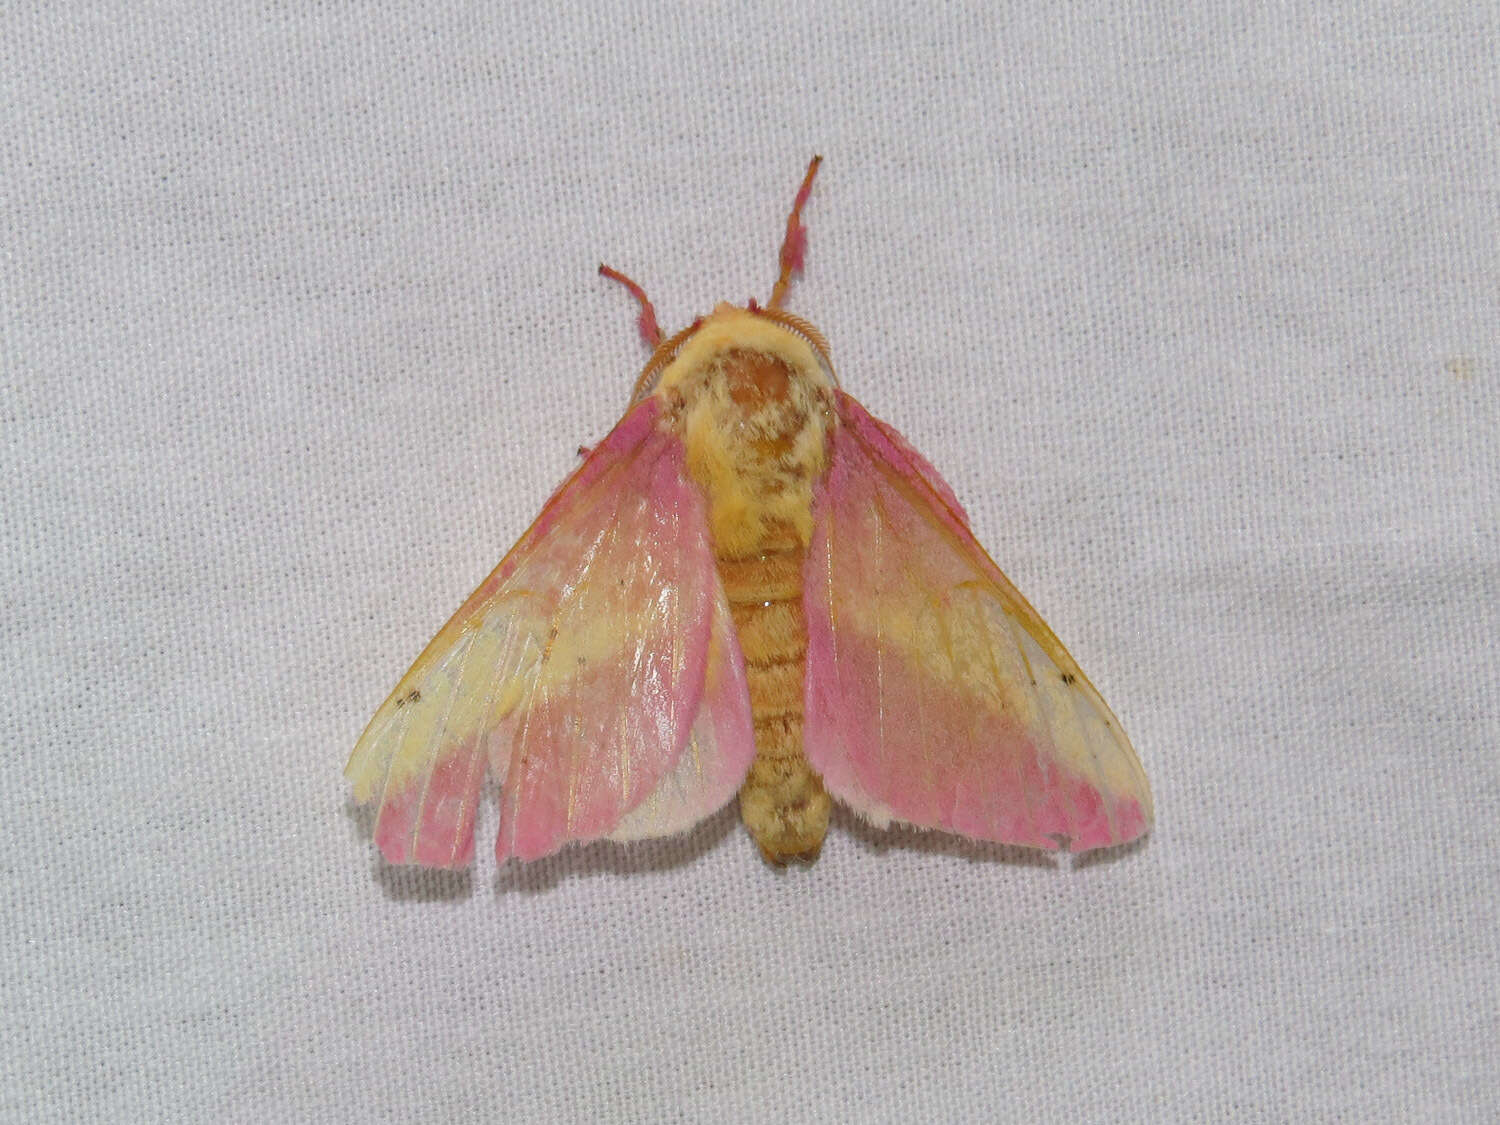 Rosy Maple Moth - Encyclopedia of Life